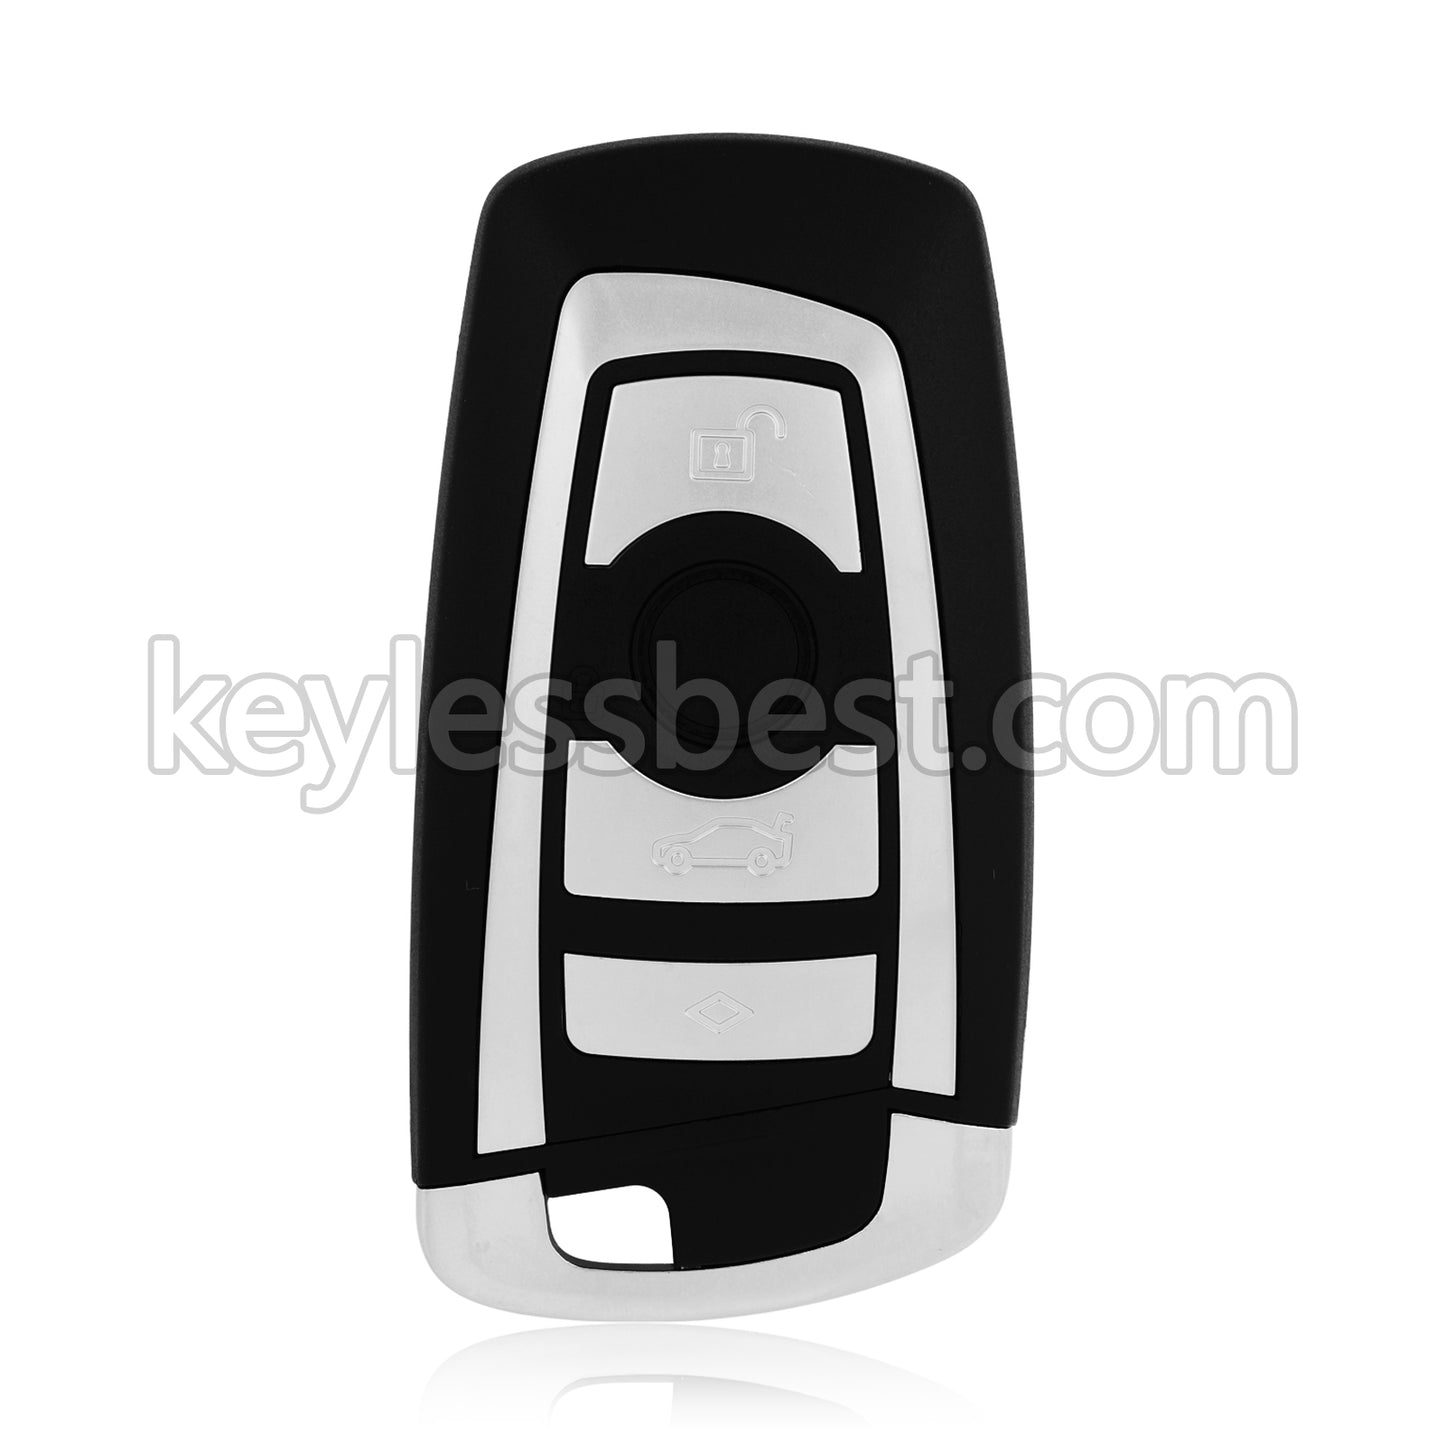 2009 - 2016 BMW 3 5 6 7 X3 Series / 4 Buttons Remote Key / KR55WK49863 / 433MHz